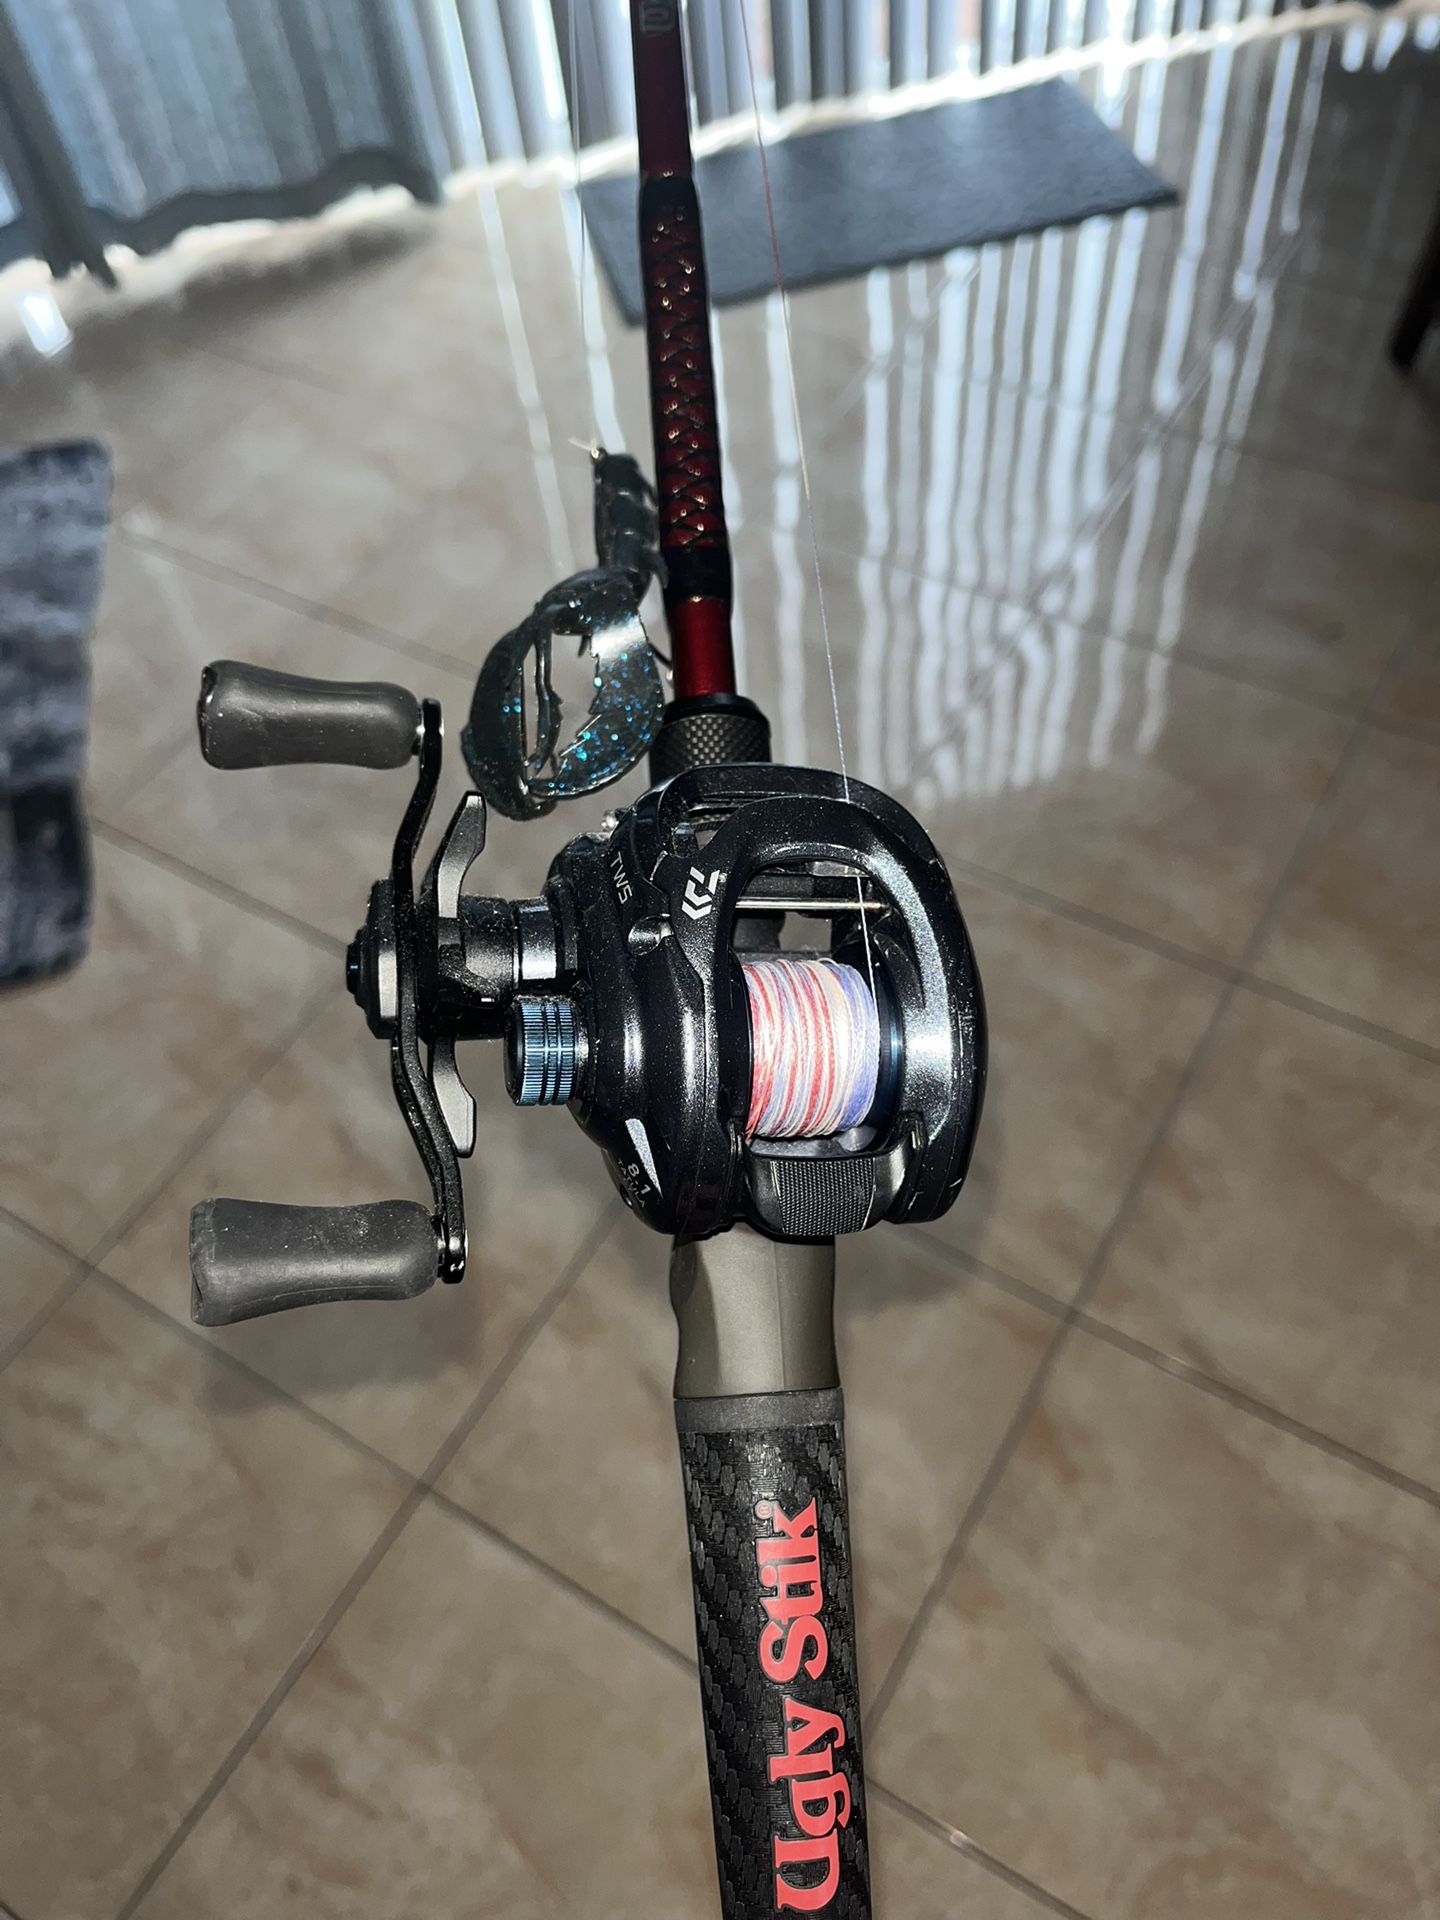 Fishing Rod: reel - diawa tatula  ct and  rod - carbon ugly stick